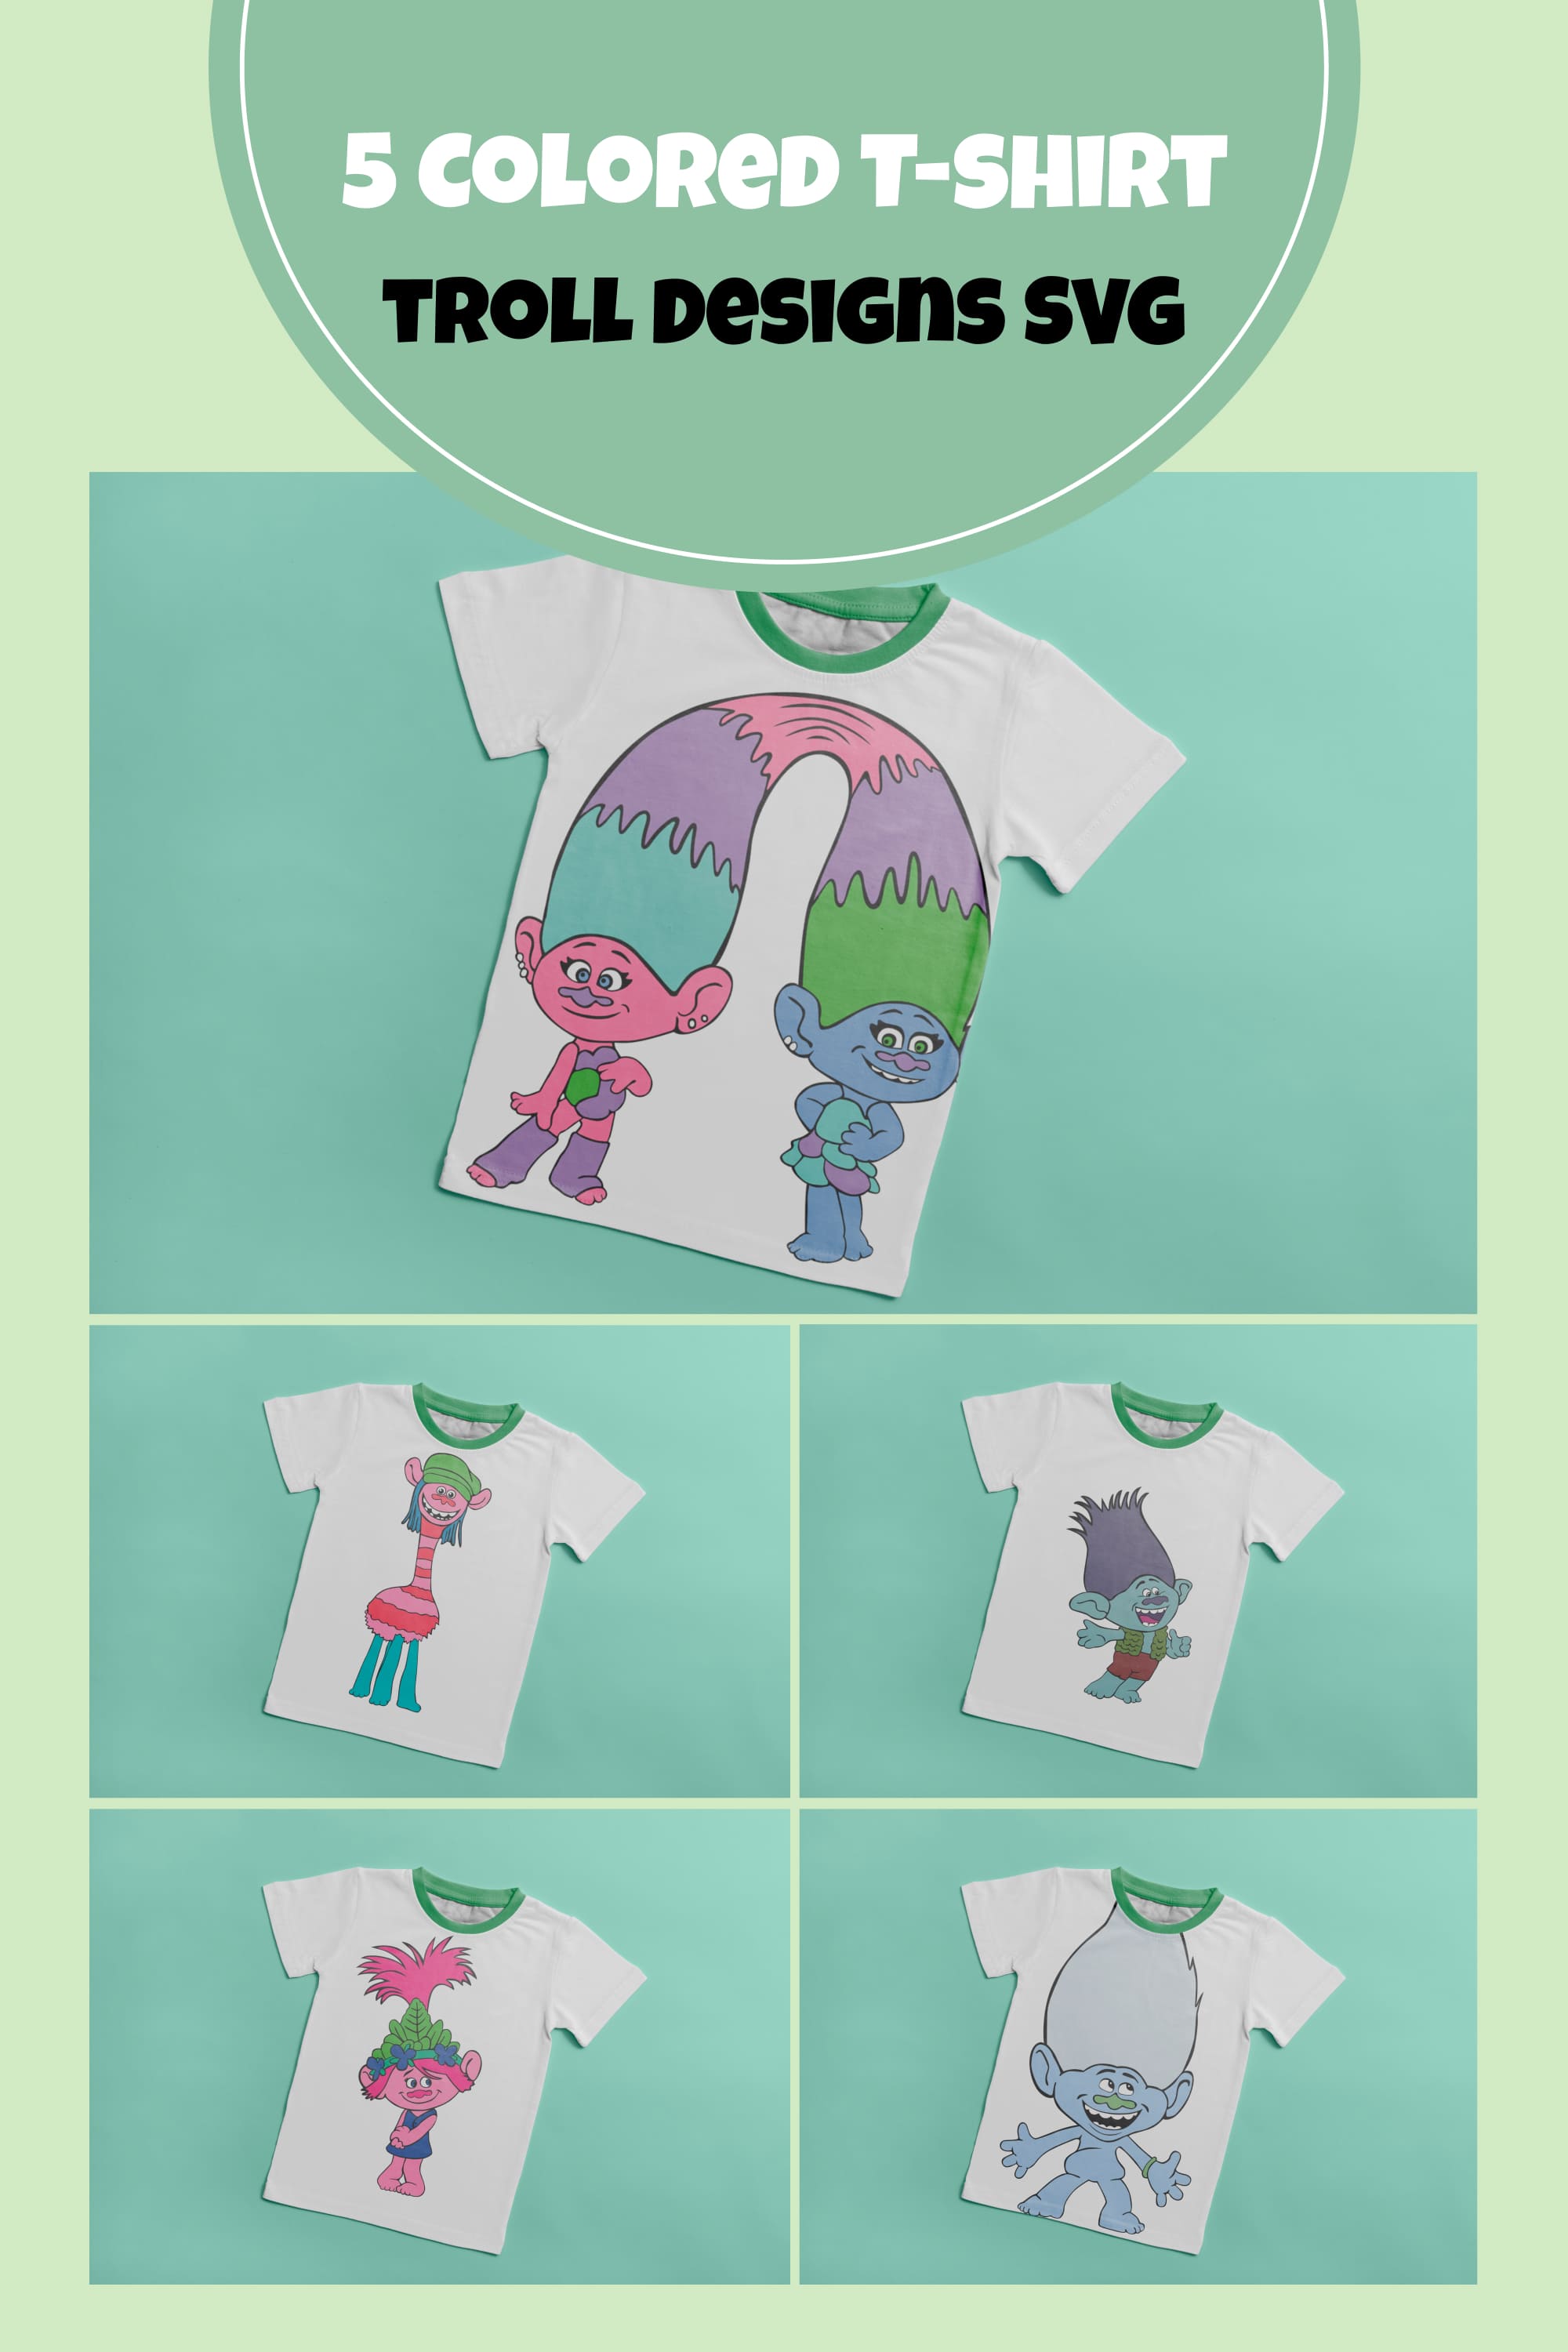 5 Colored Troll T-shirt Designs Svg - Pinterest.